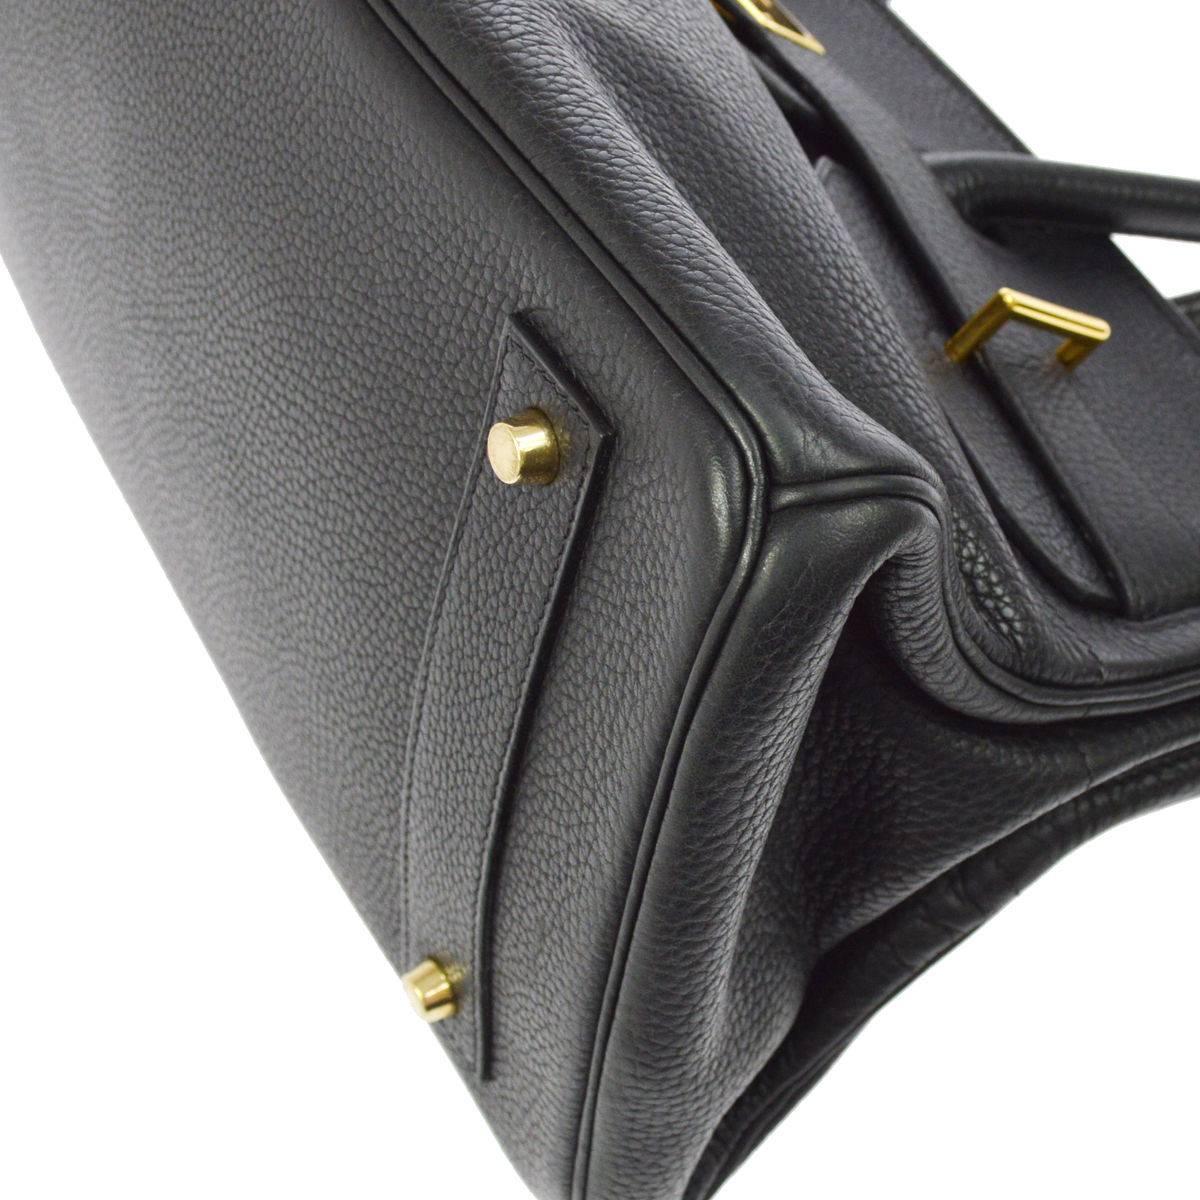 Hermes Birkin Black Leather Gold Hardware Top Handle Satchel Bag and Accessories 3